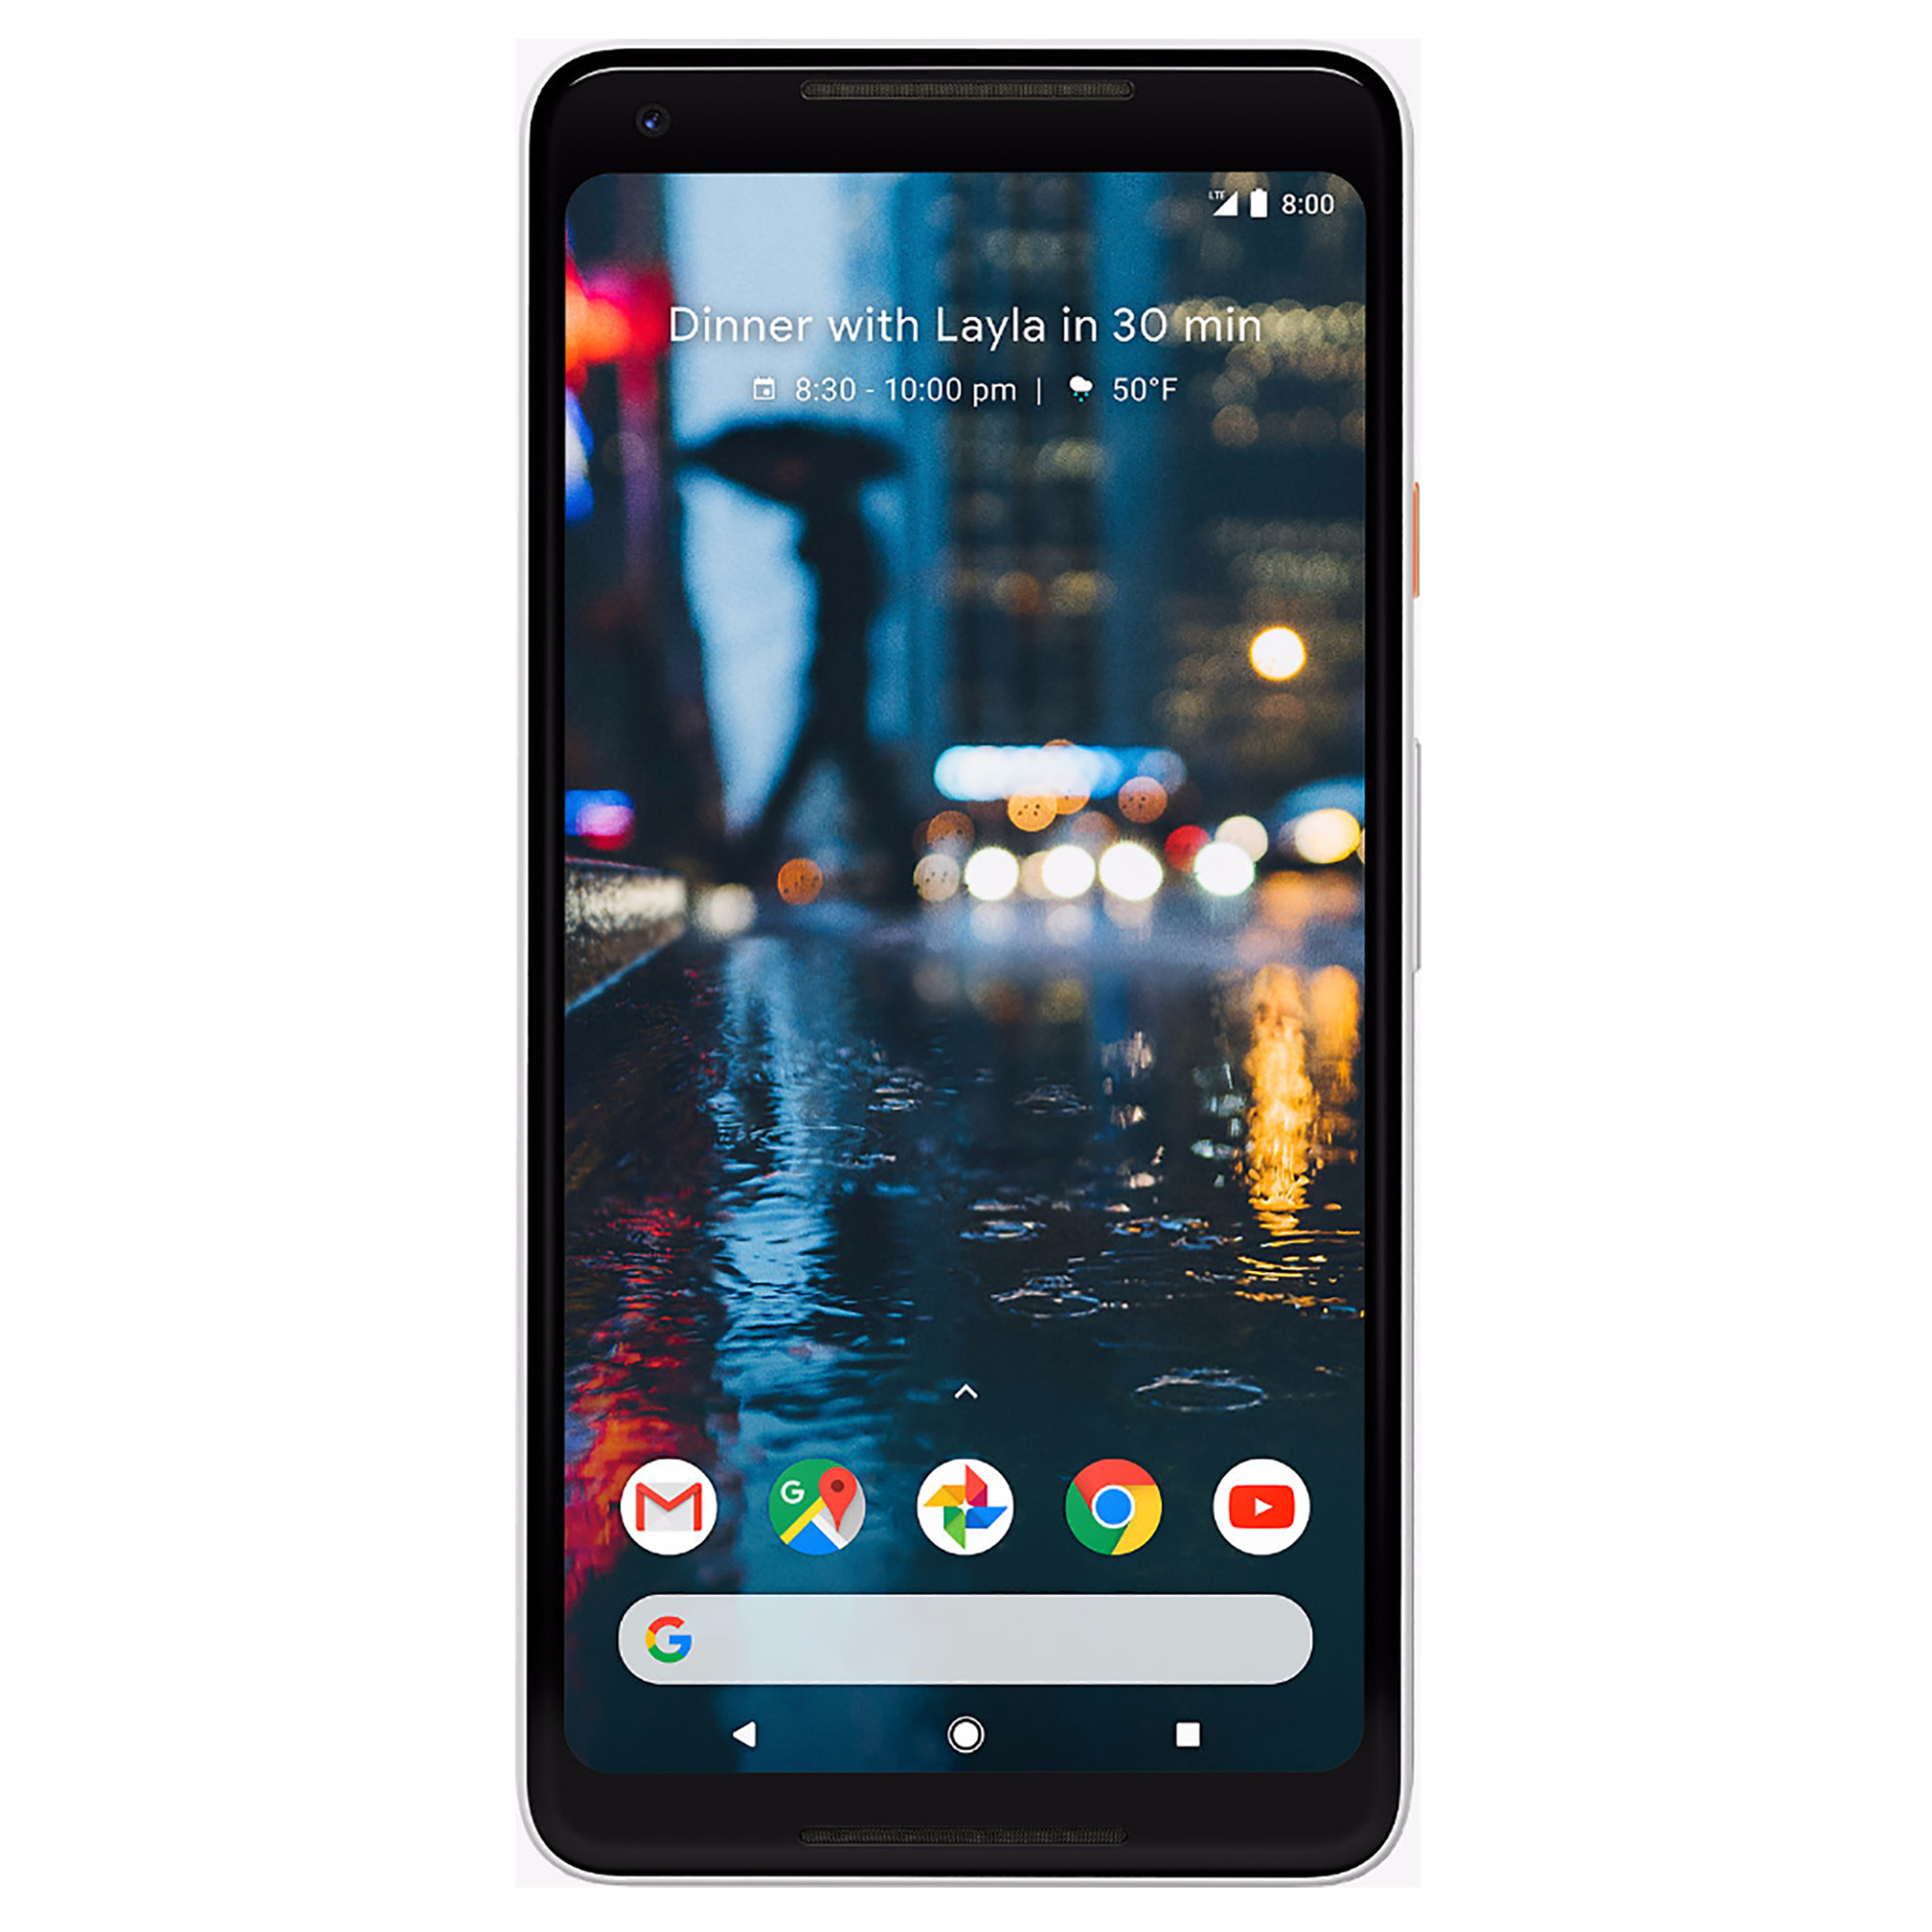 32GB Quite Black Renewed Version Google Pixel XL G2PW210032GBBK Factory Unlocked Smartphone U.S 5.5-Inch Display